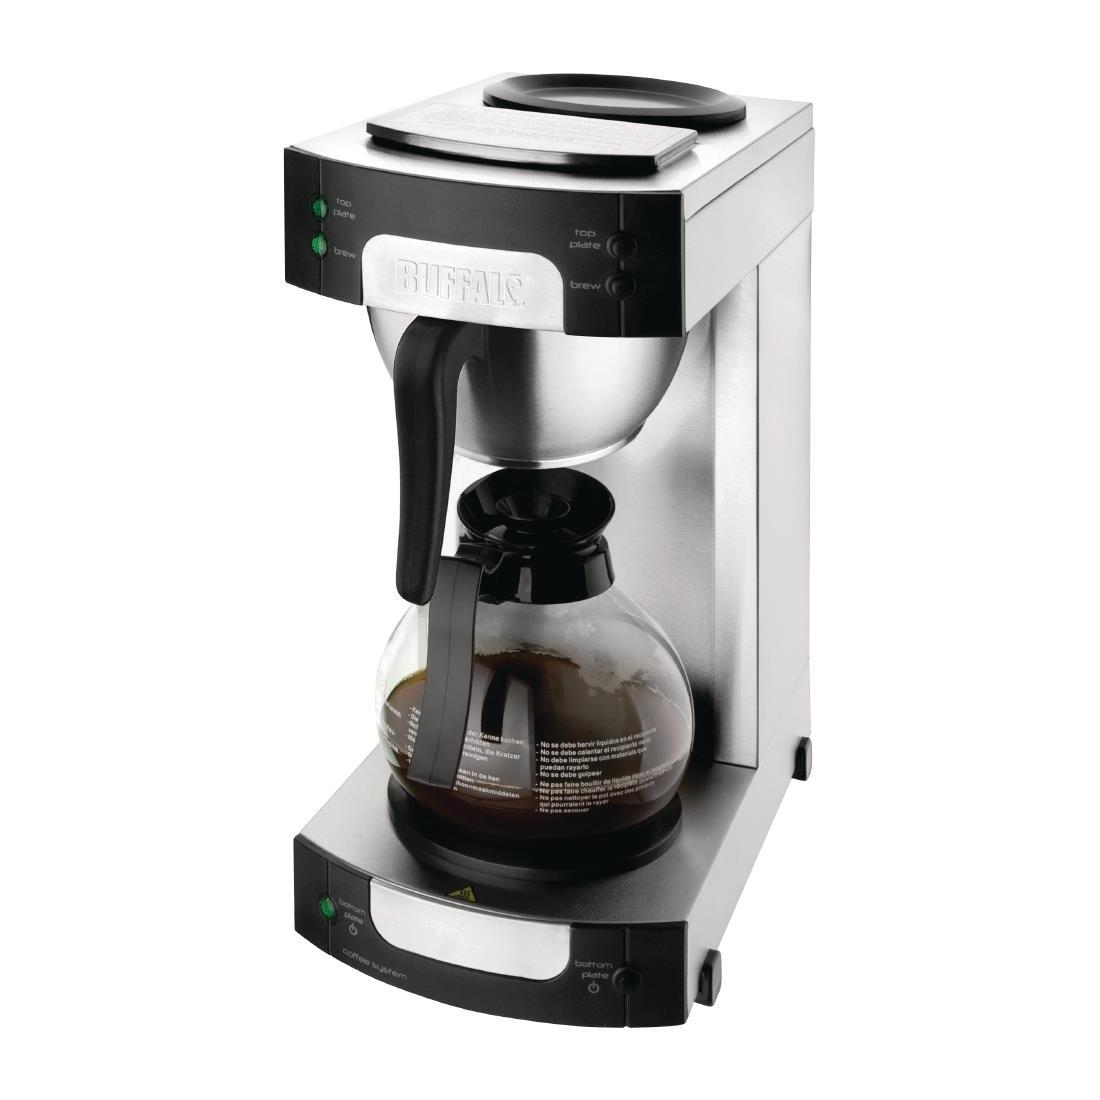 Buffalo Filter Coffee Maker - CW305  - 8